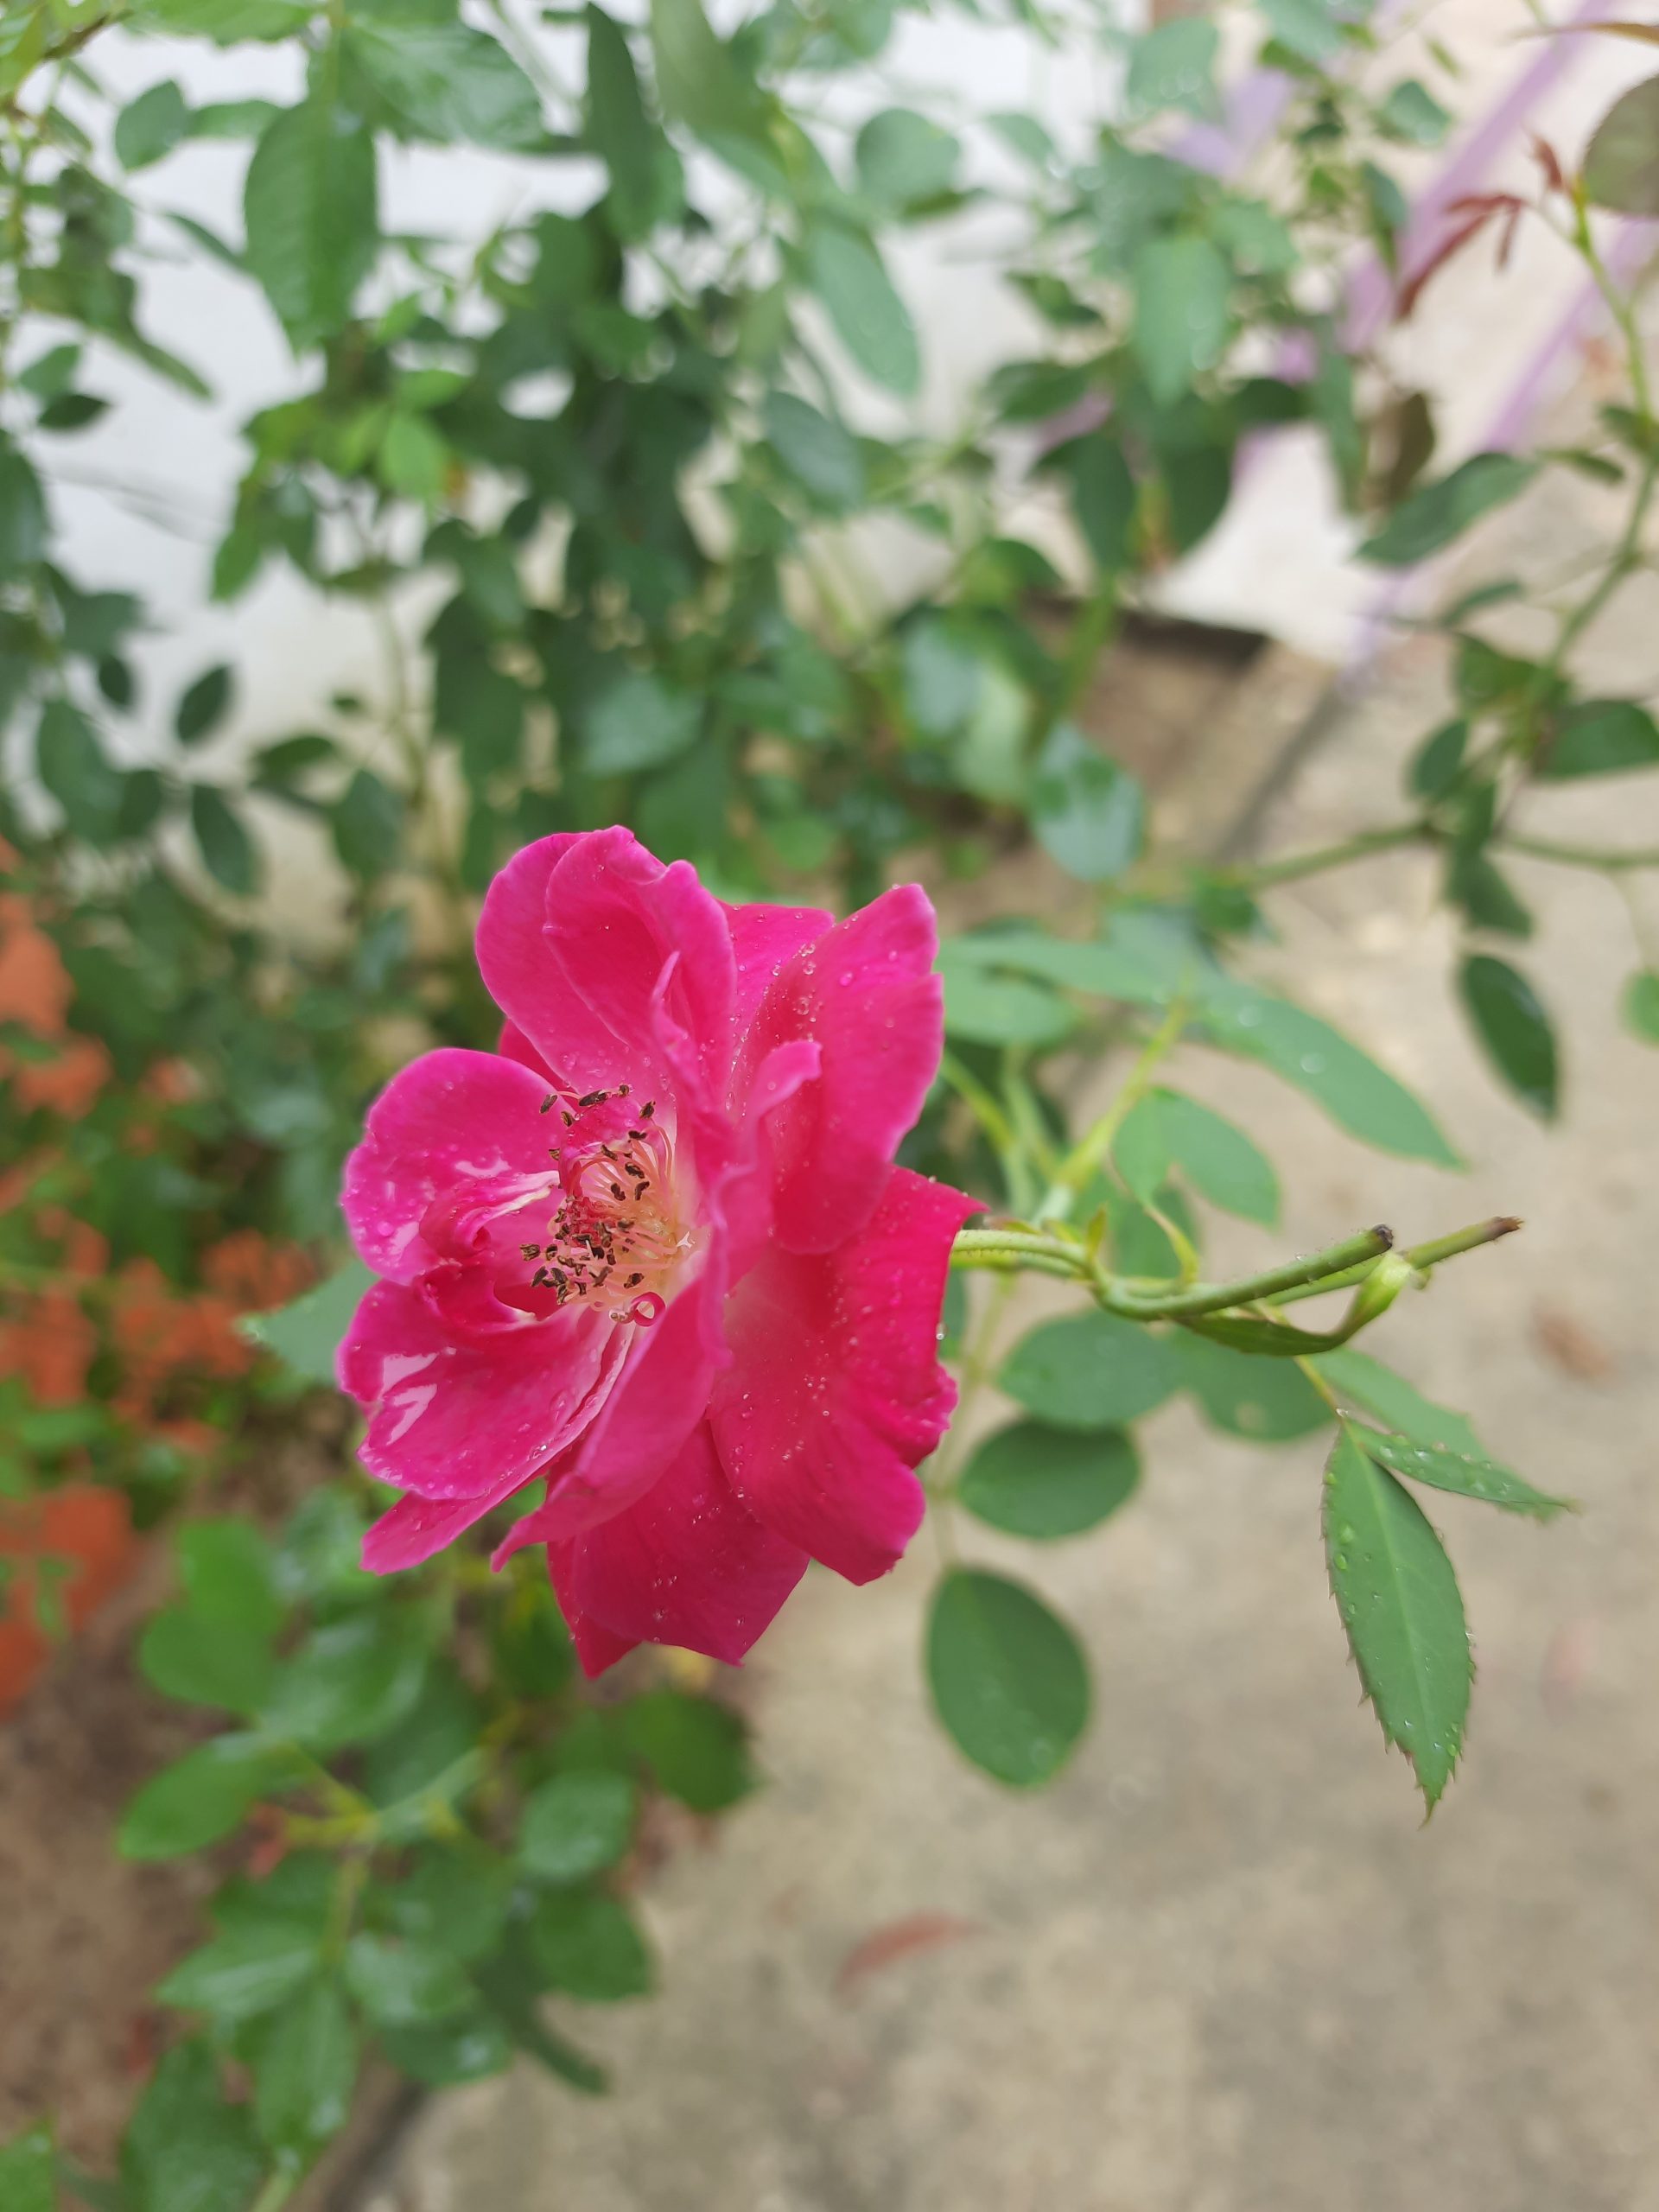 Beautiful pink rose flower on Focus